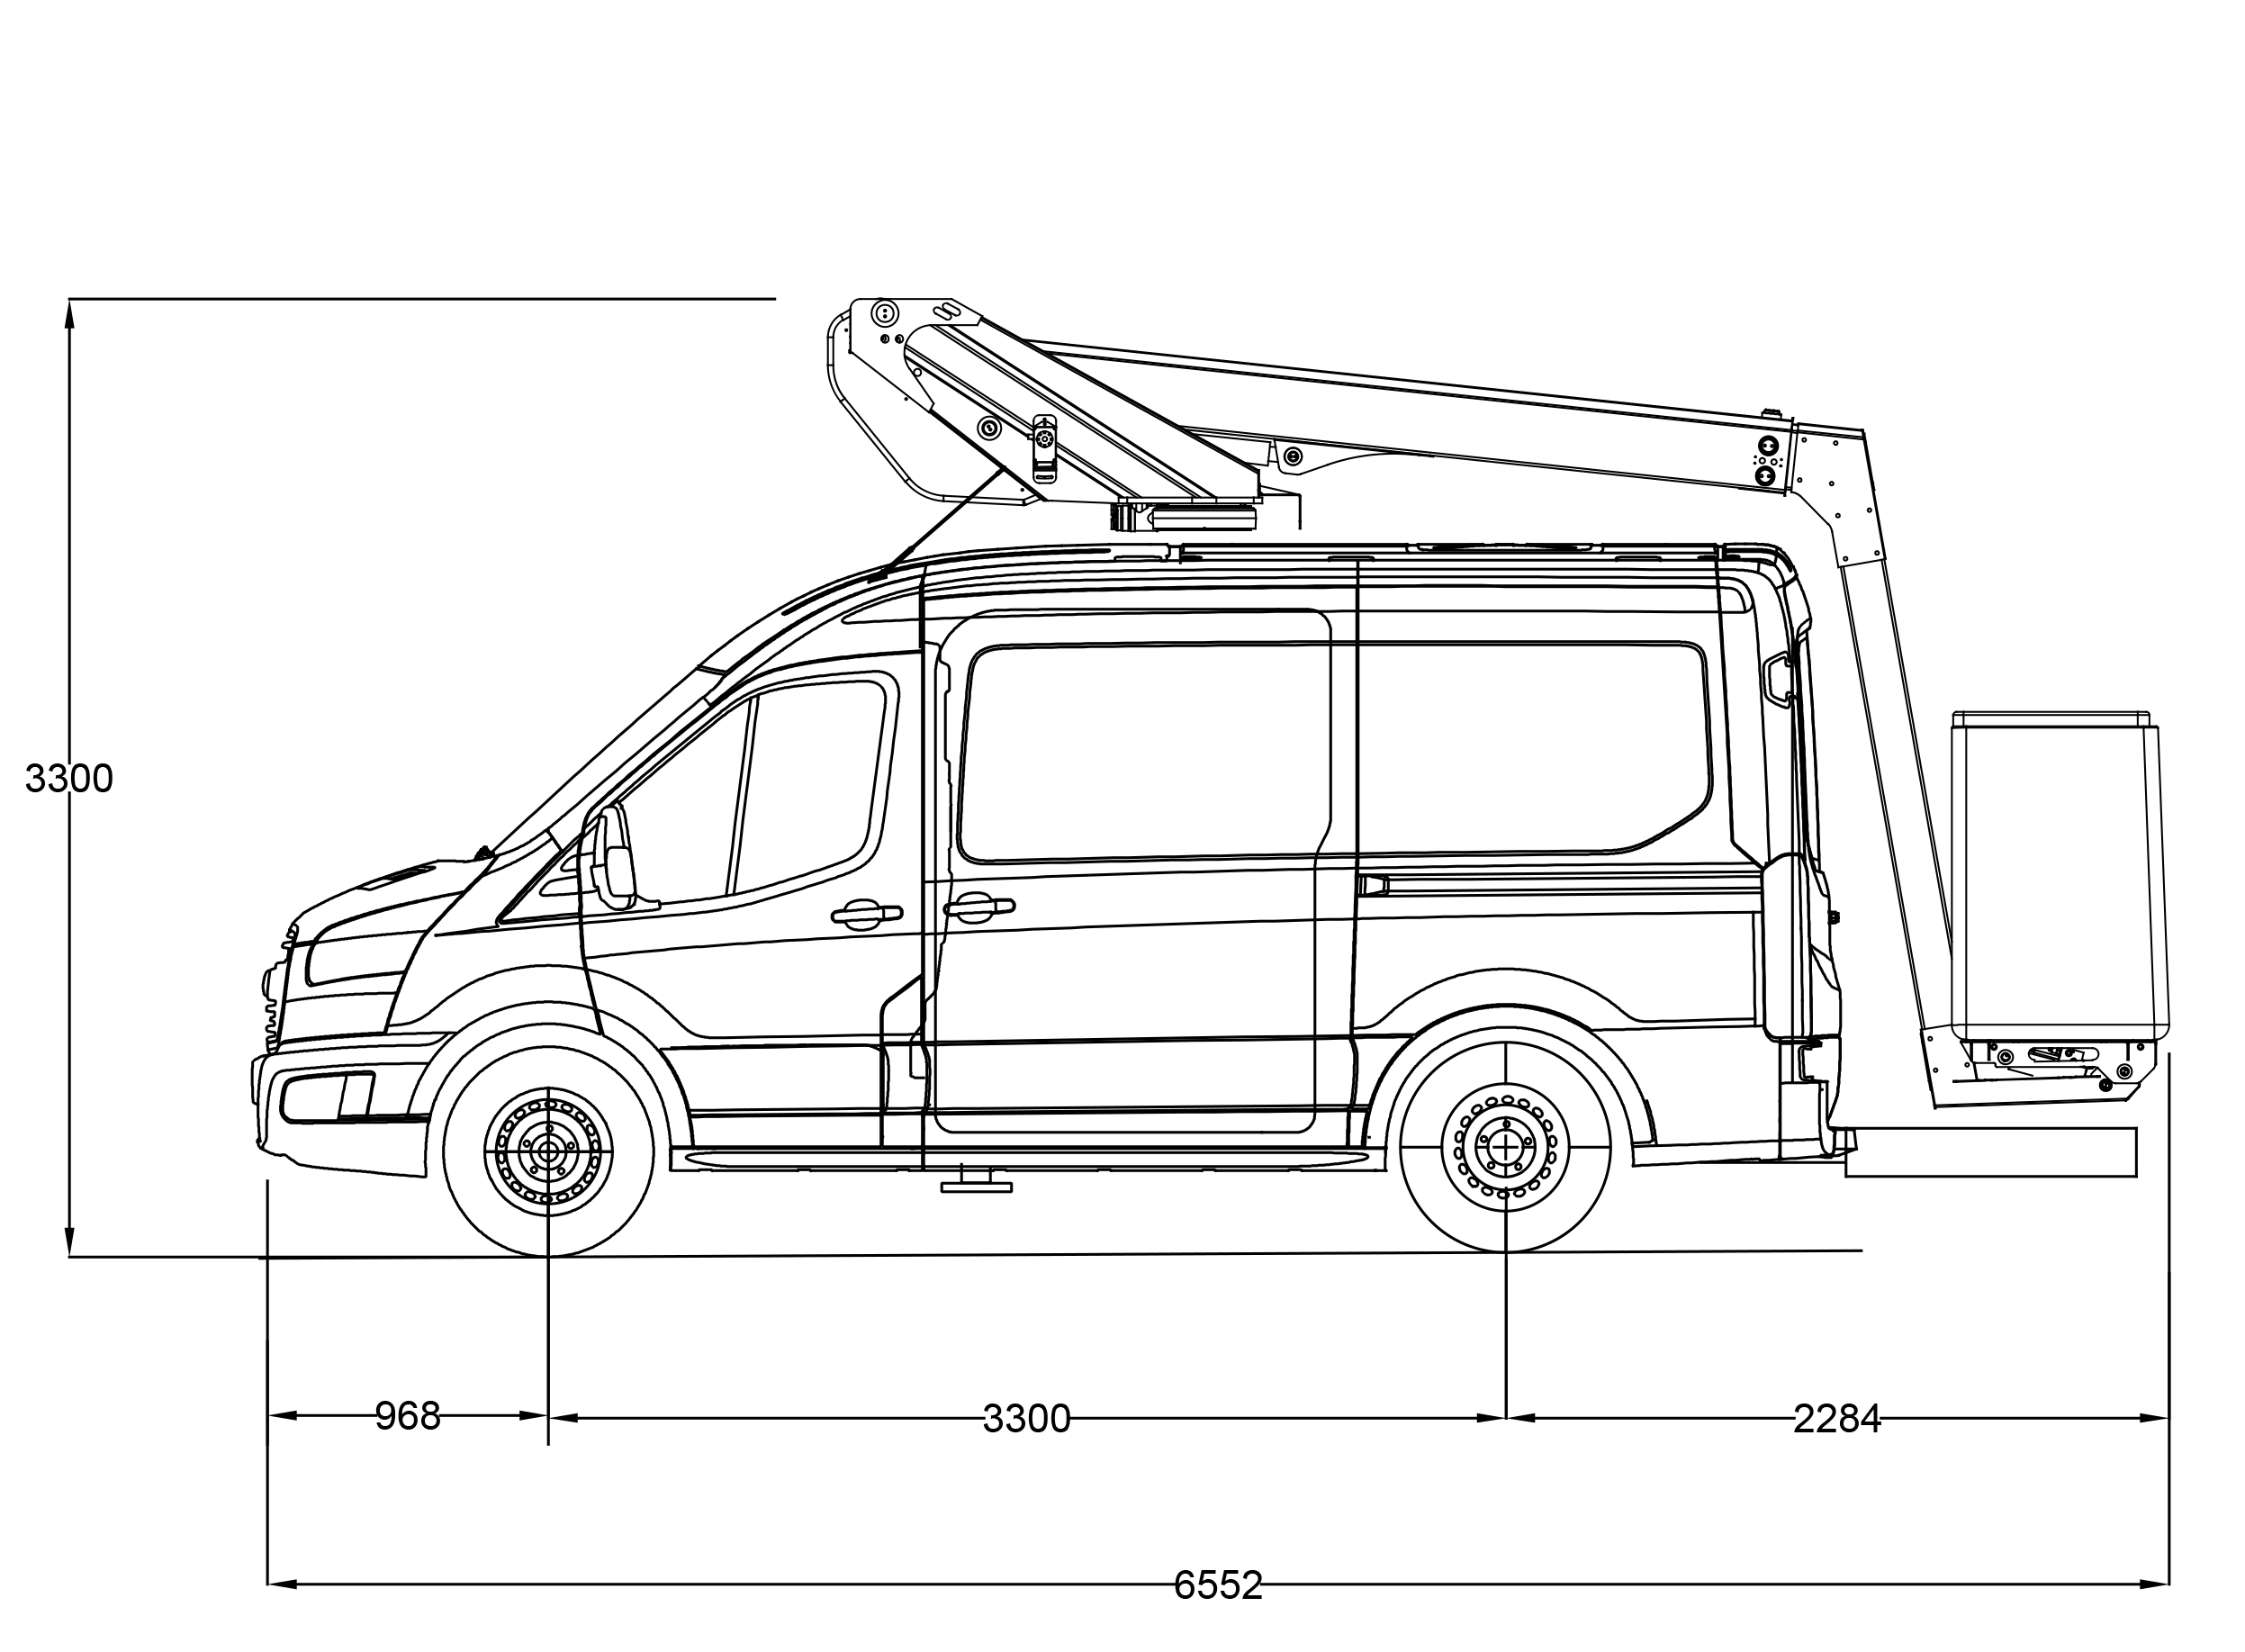 Схема автогидроподъемника K26 на базе фургона Ford Transit